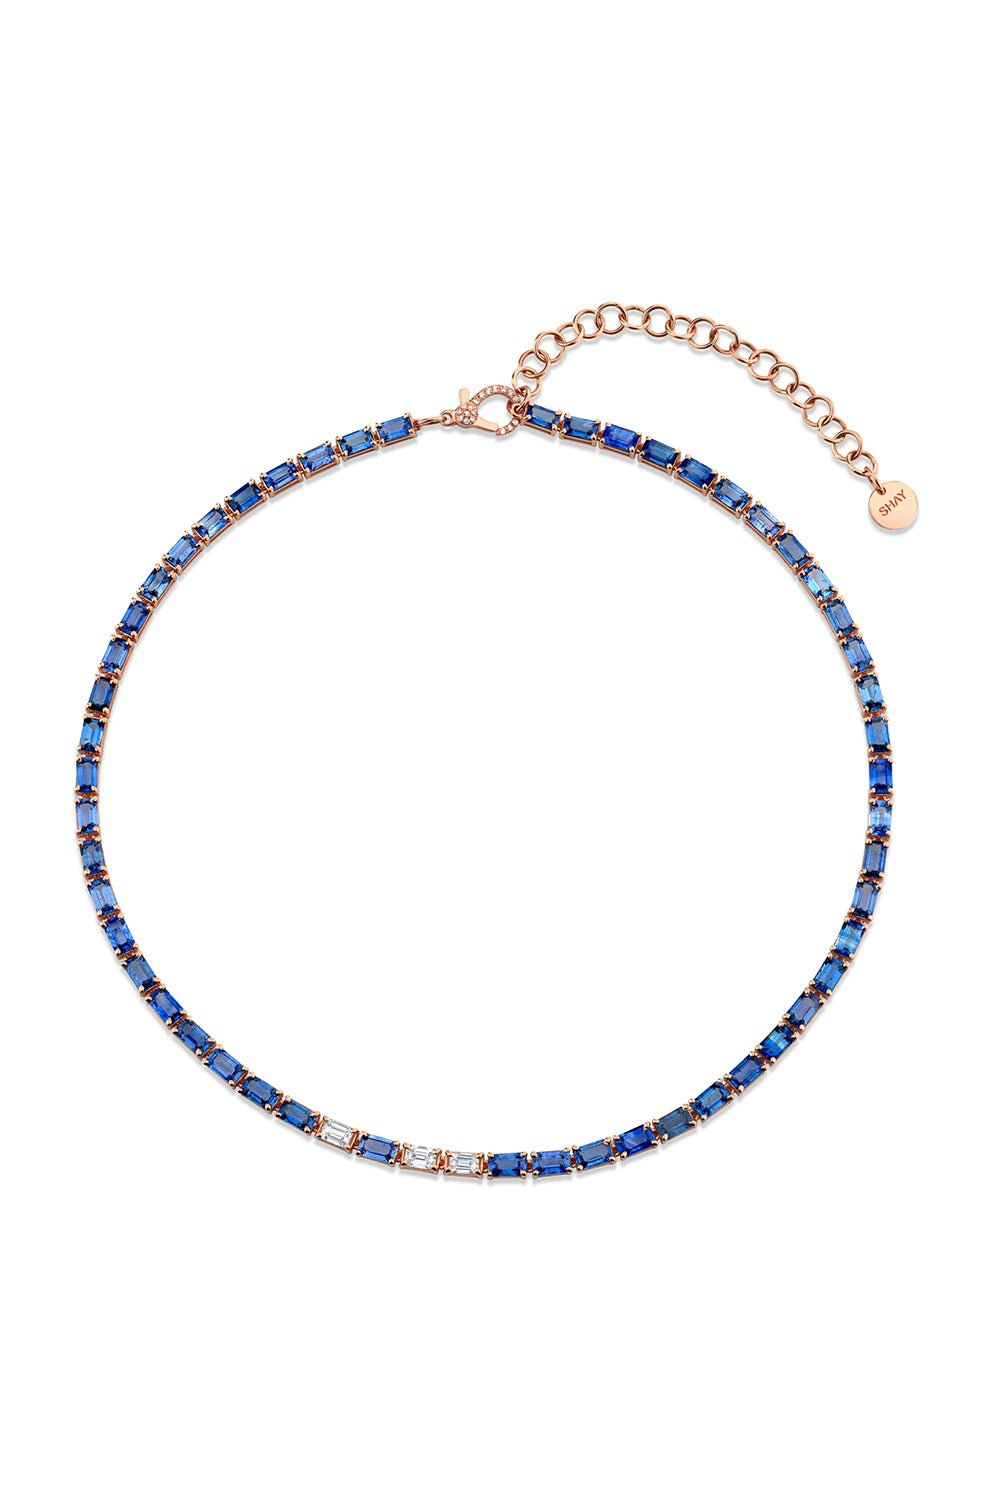 SHAY JEWELRY-Blue Ceylon Sapphire Diamond Tennis Necklace-ROSE GOLD